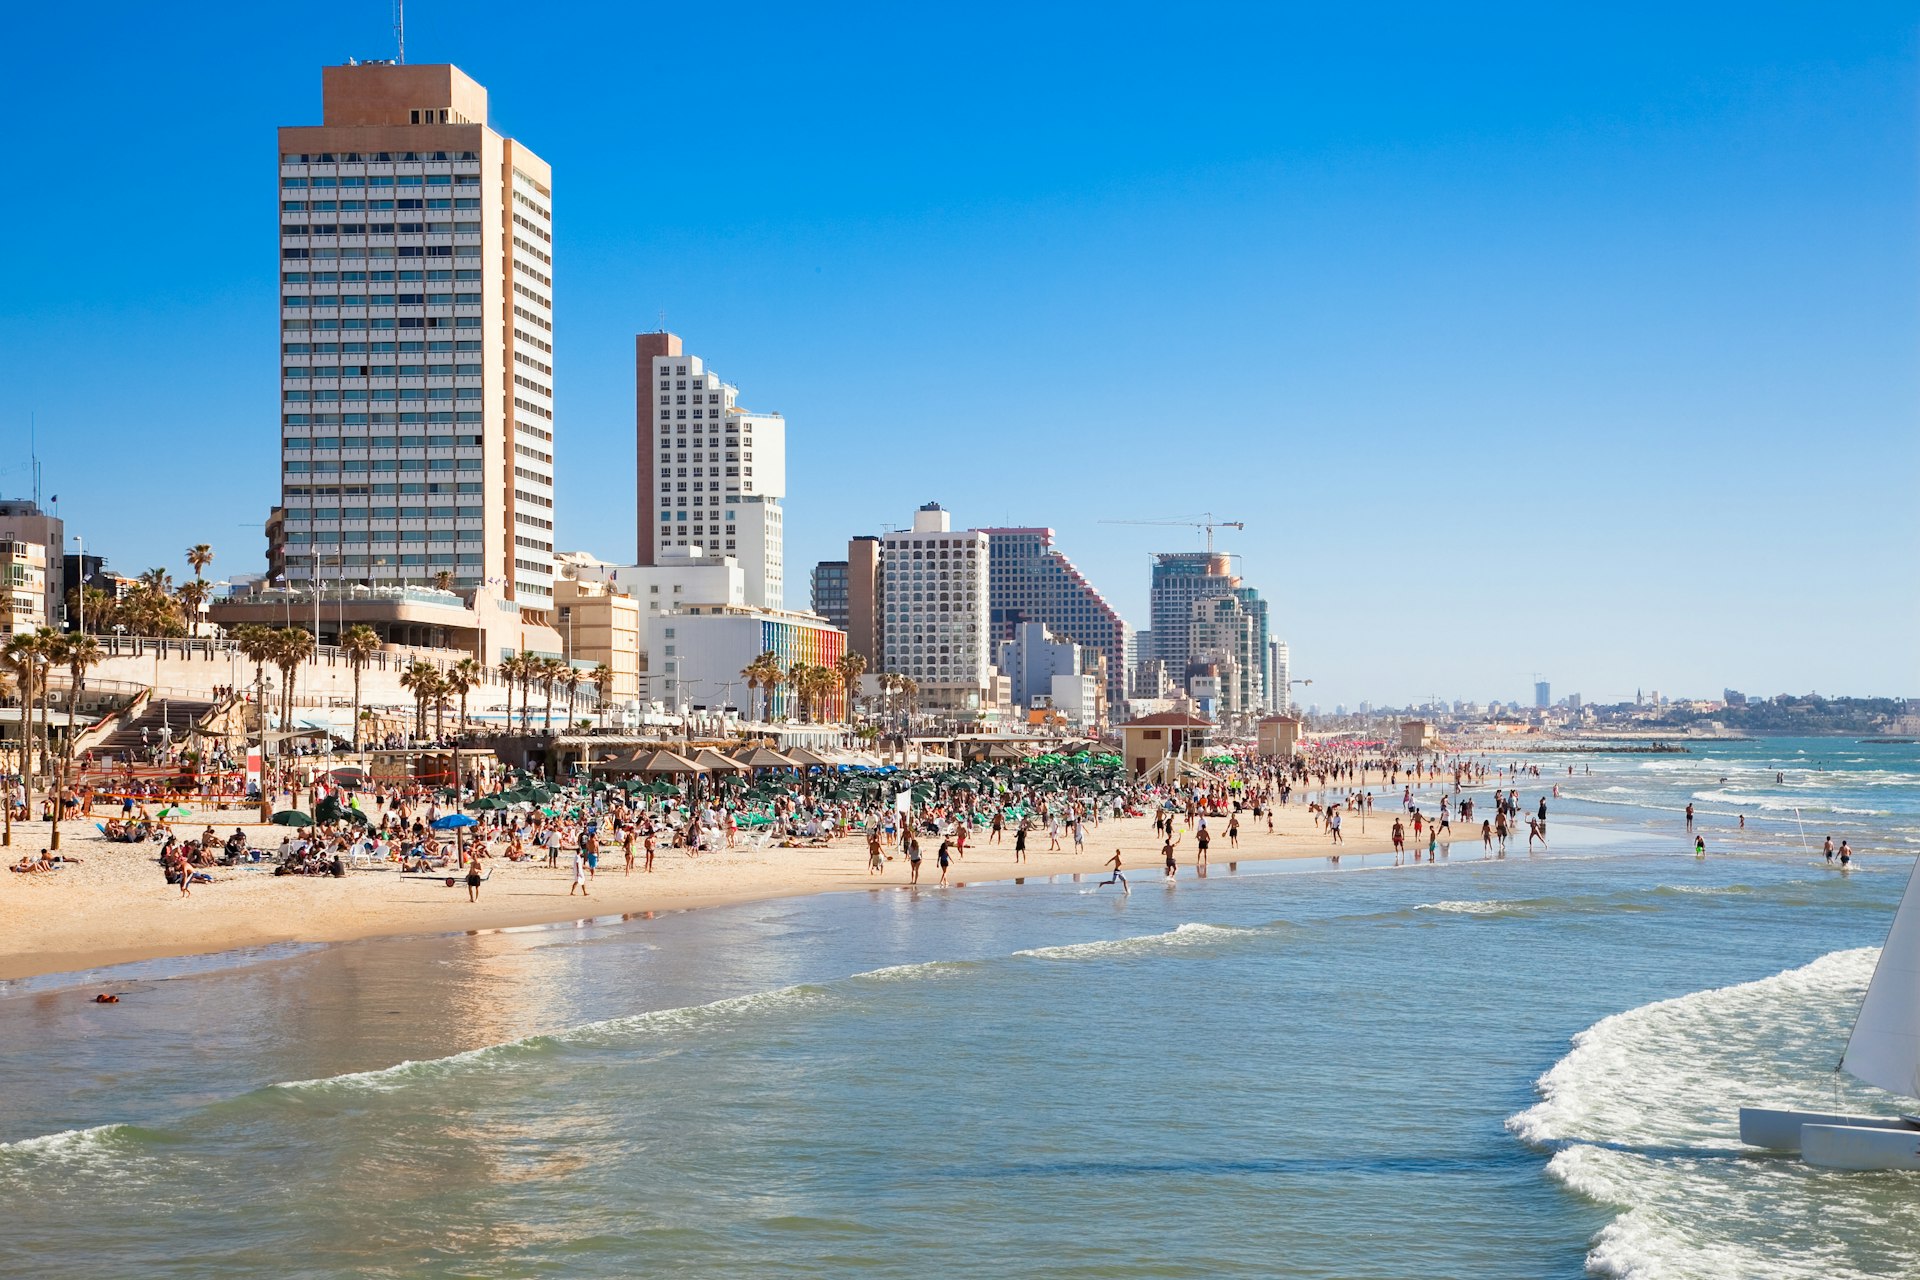 Panoramic view of the Tel-Aviv public beach on Mediterranean sea